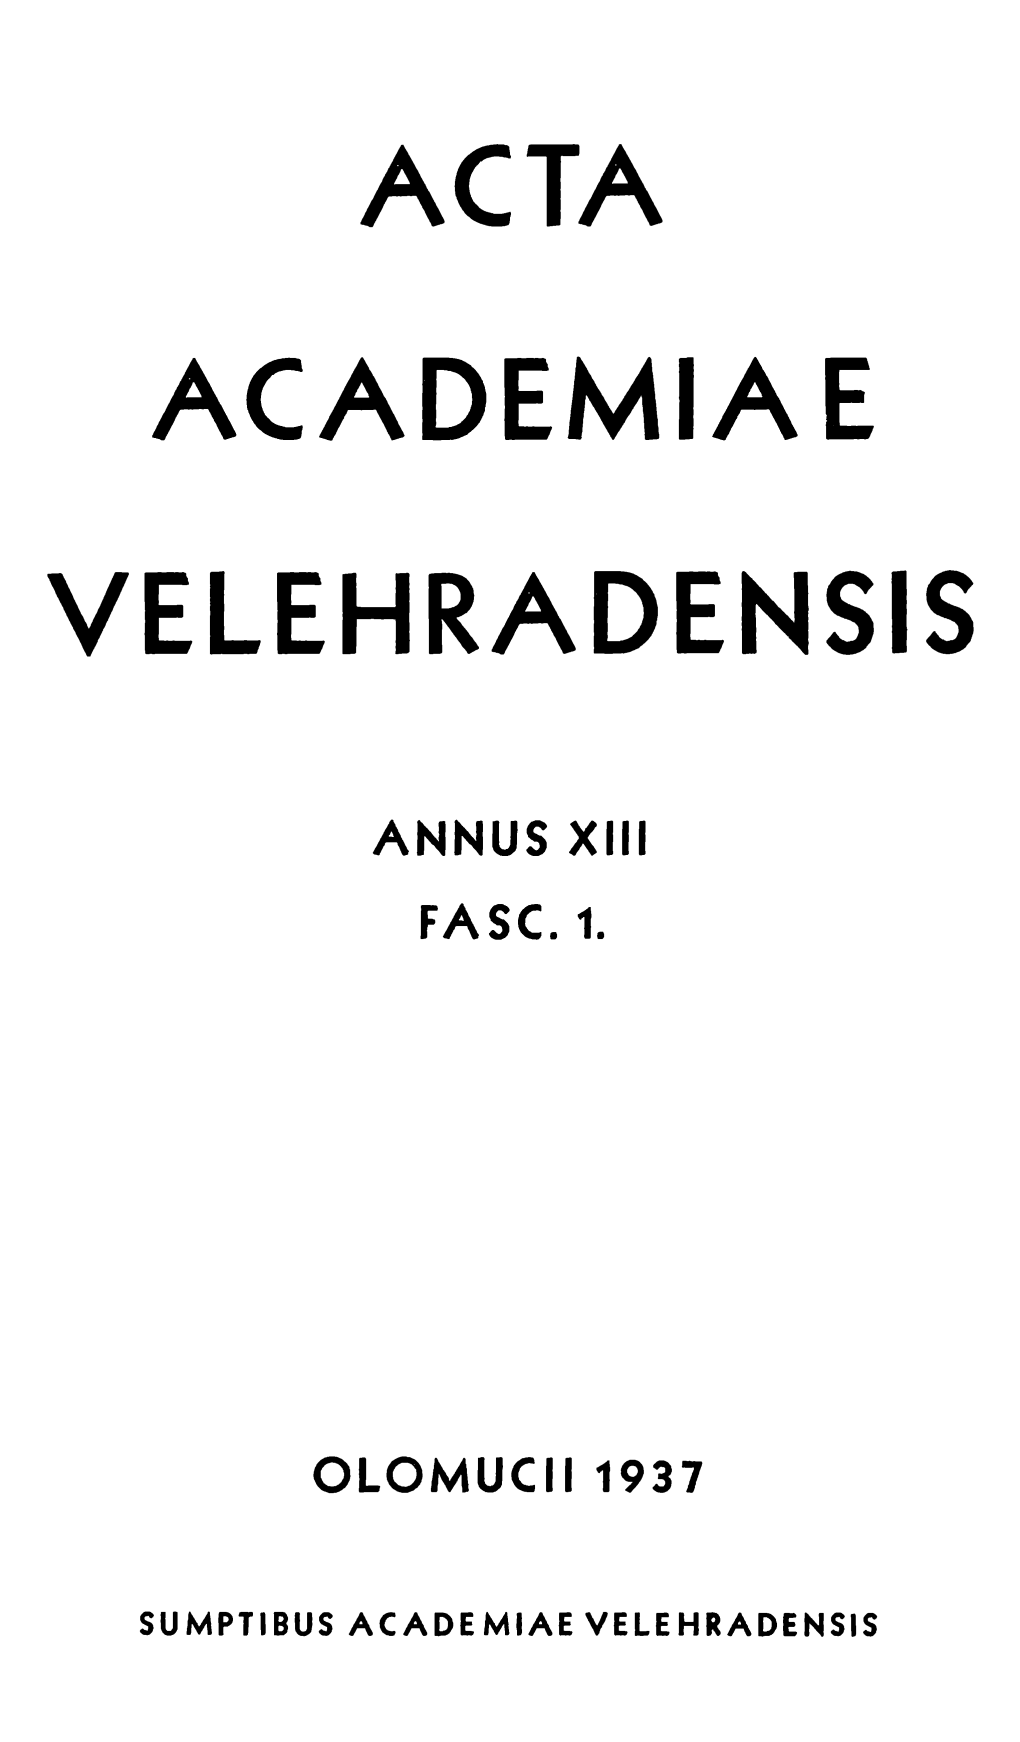 Academia E Velehradensis